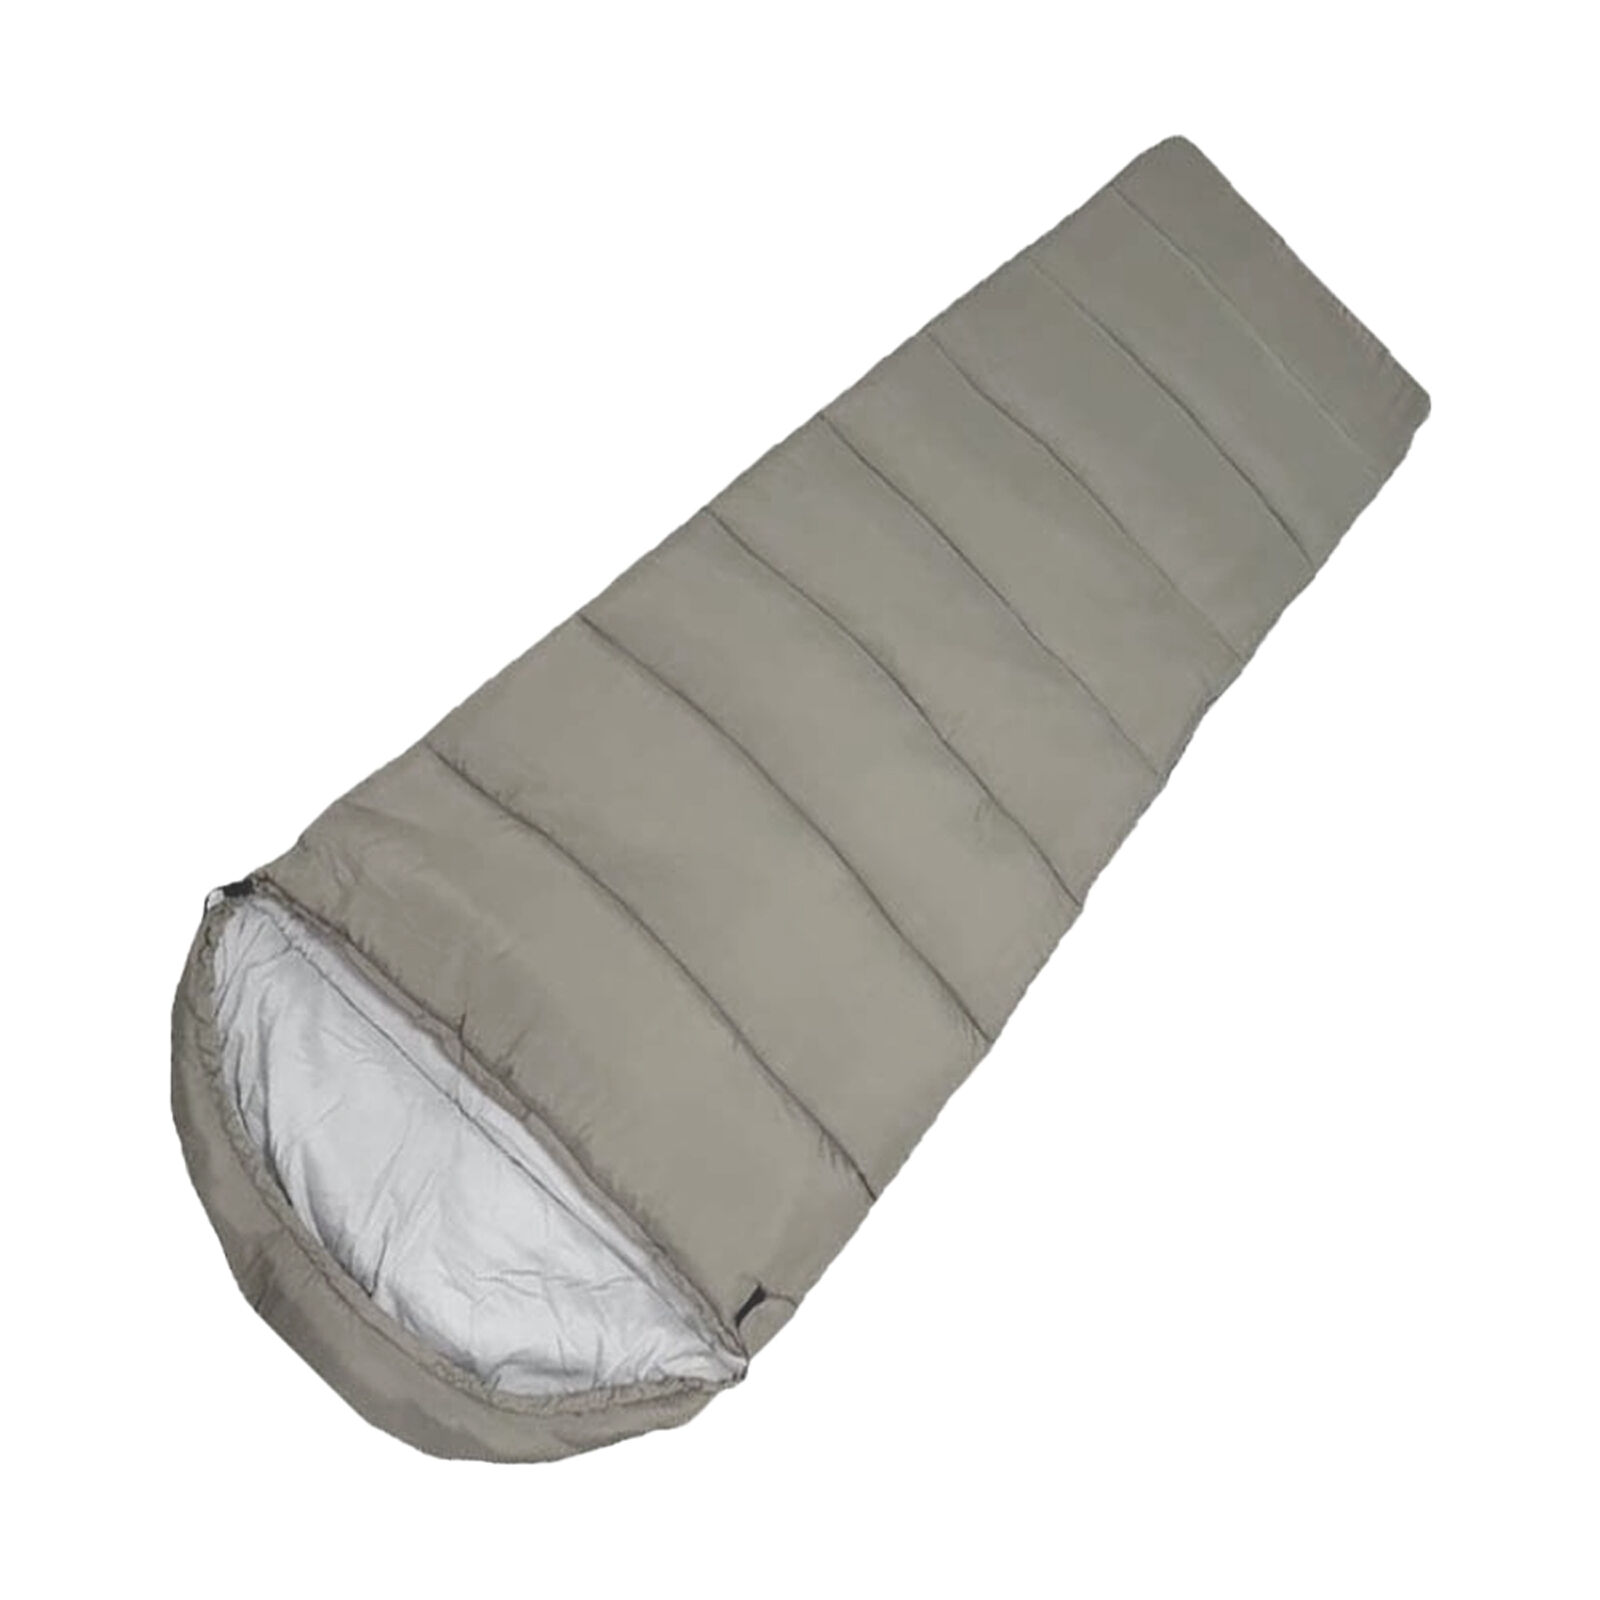 Camping Ultralight Cotton Sleeping Bag